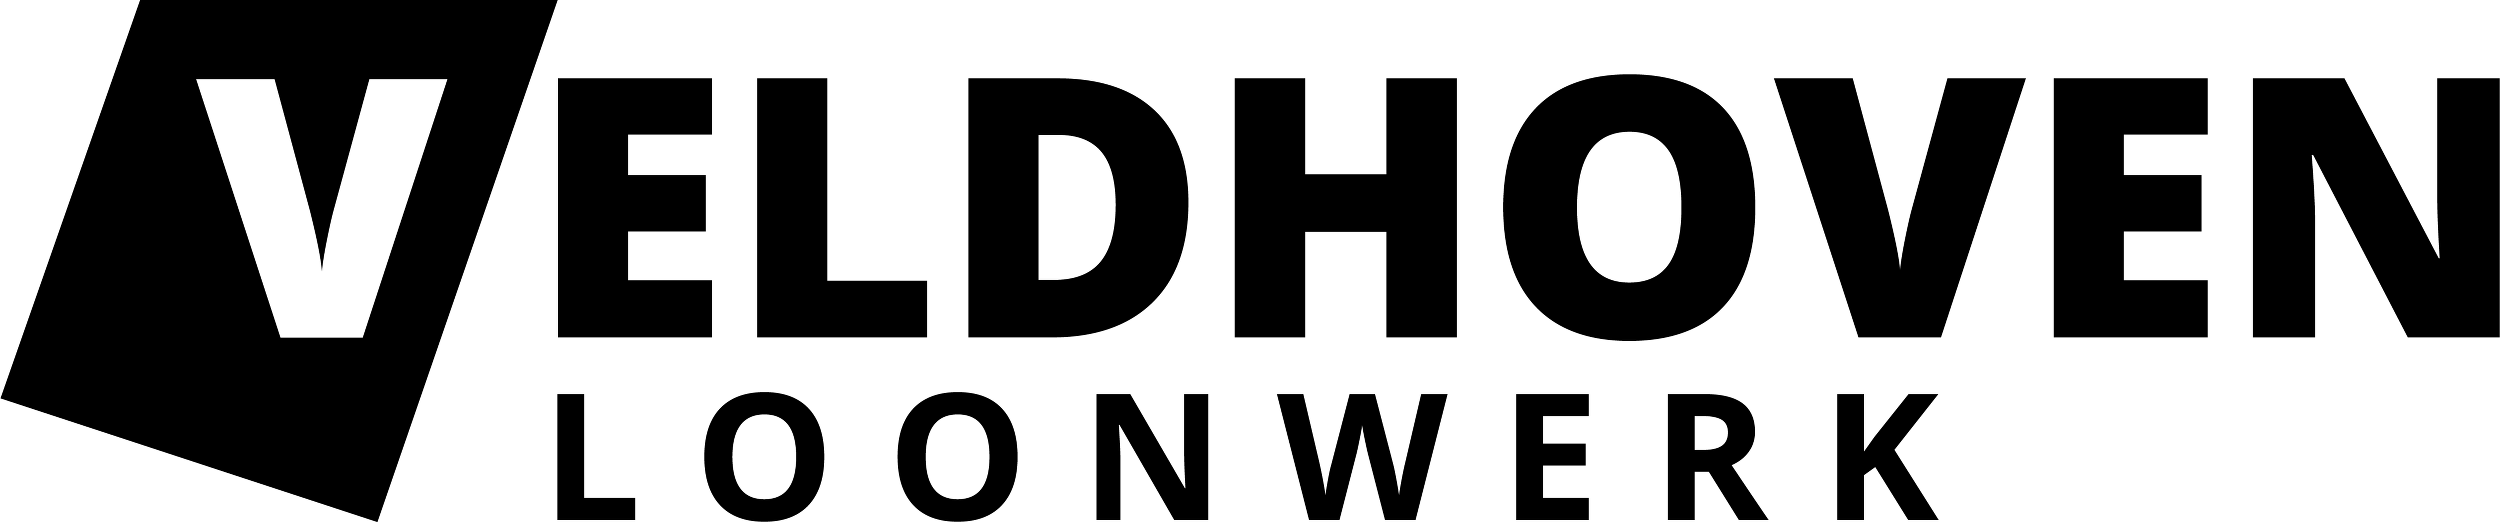 Logo Veldhoven.png